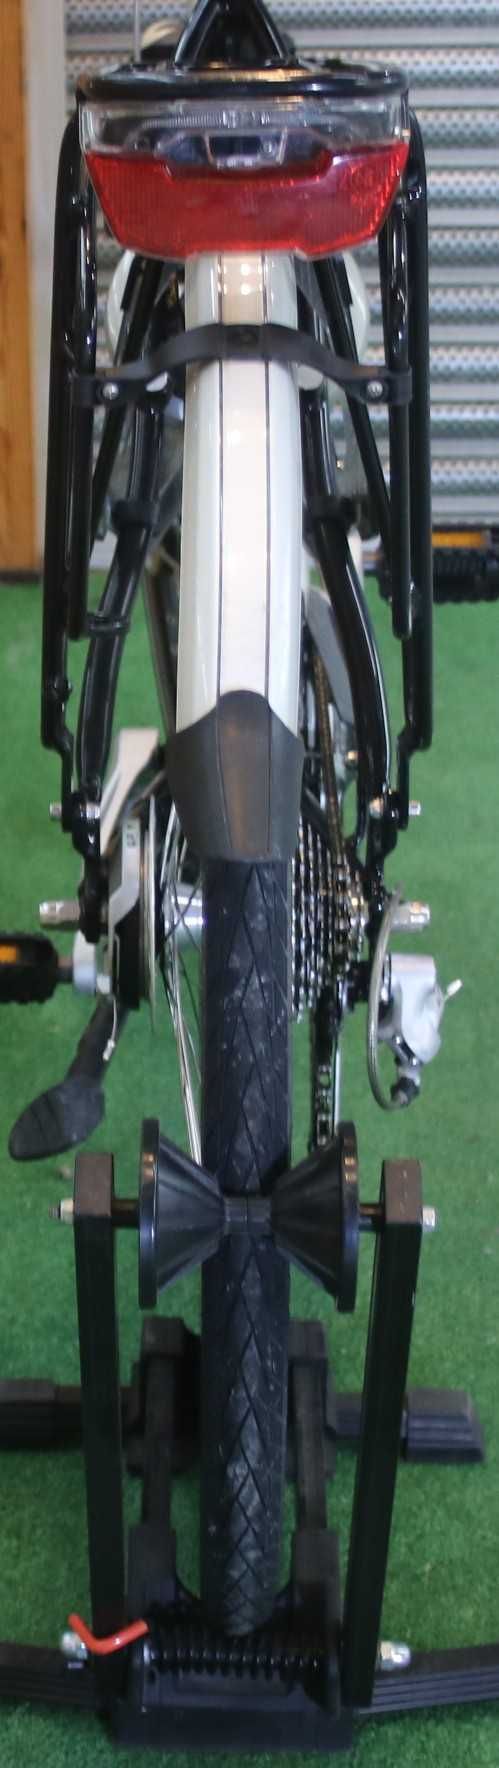 Rower damski Gazelle Medeo. D 57. I inne rowery z Holandii